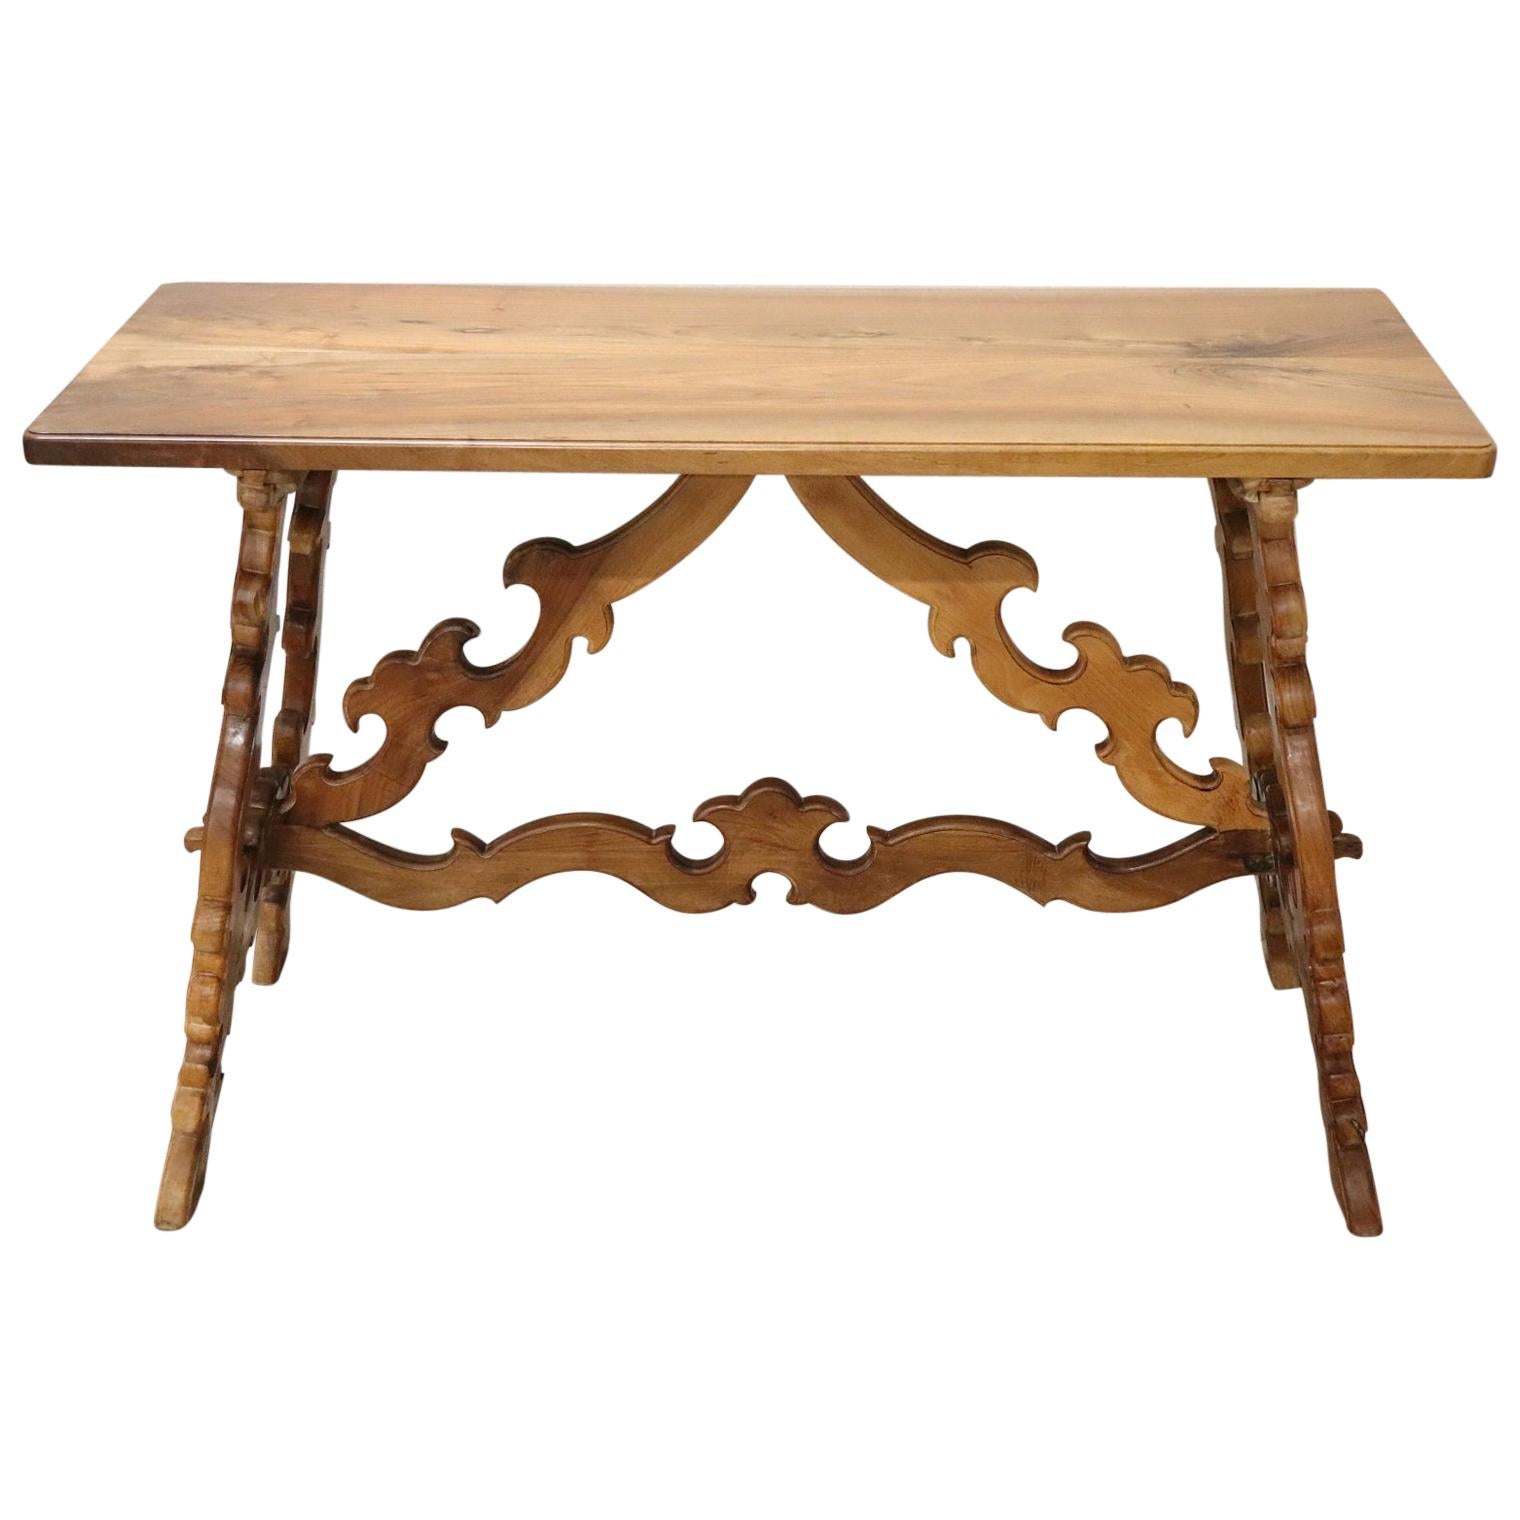 19th Century Italian Renaissance Style Walnut Desk or Side Table with Lyre Legs